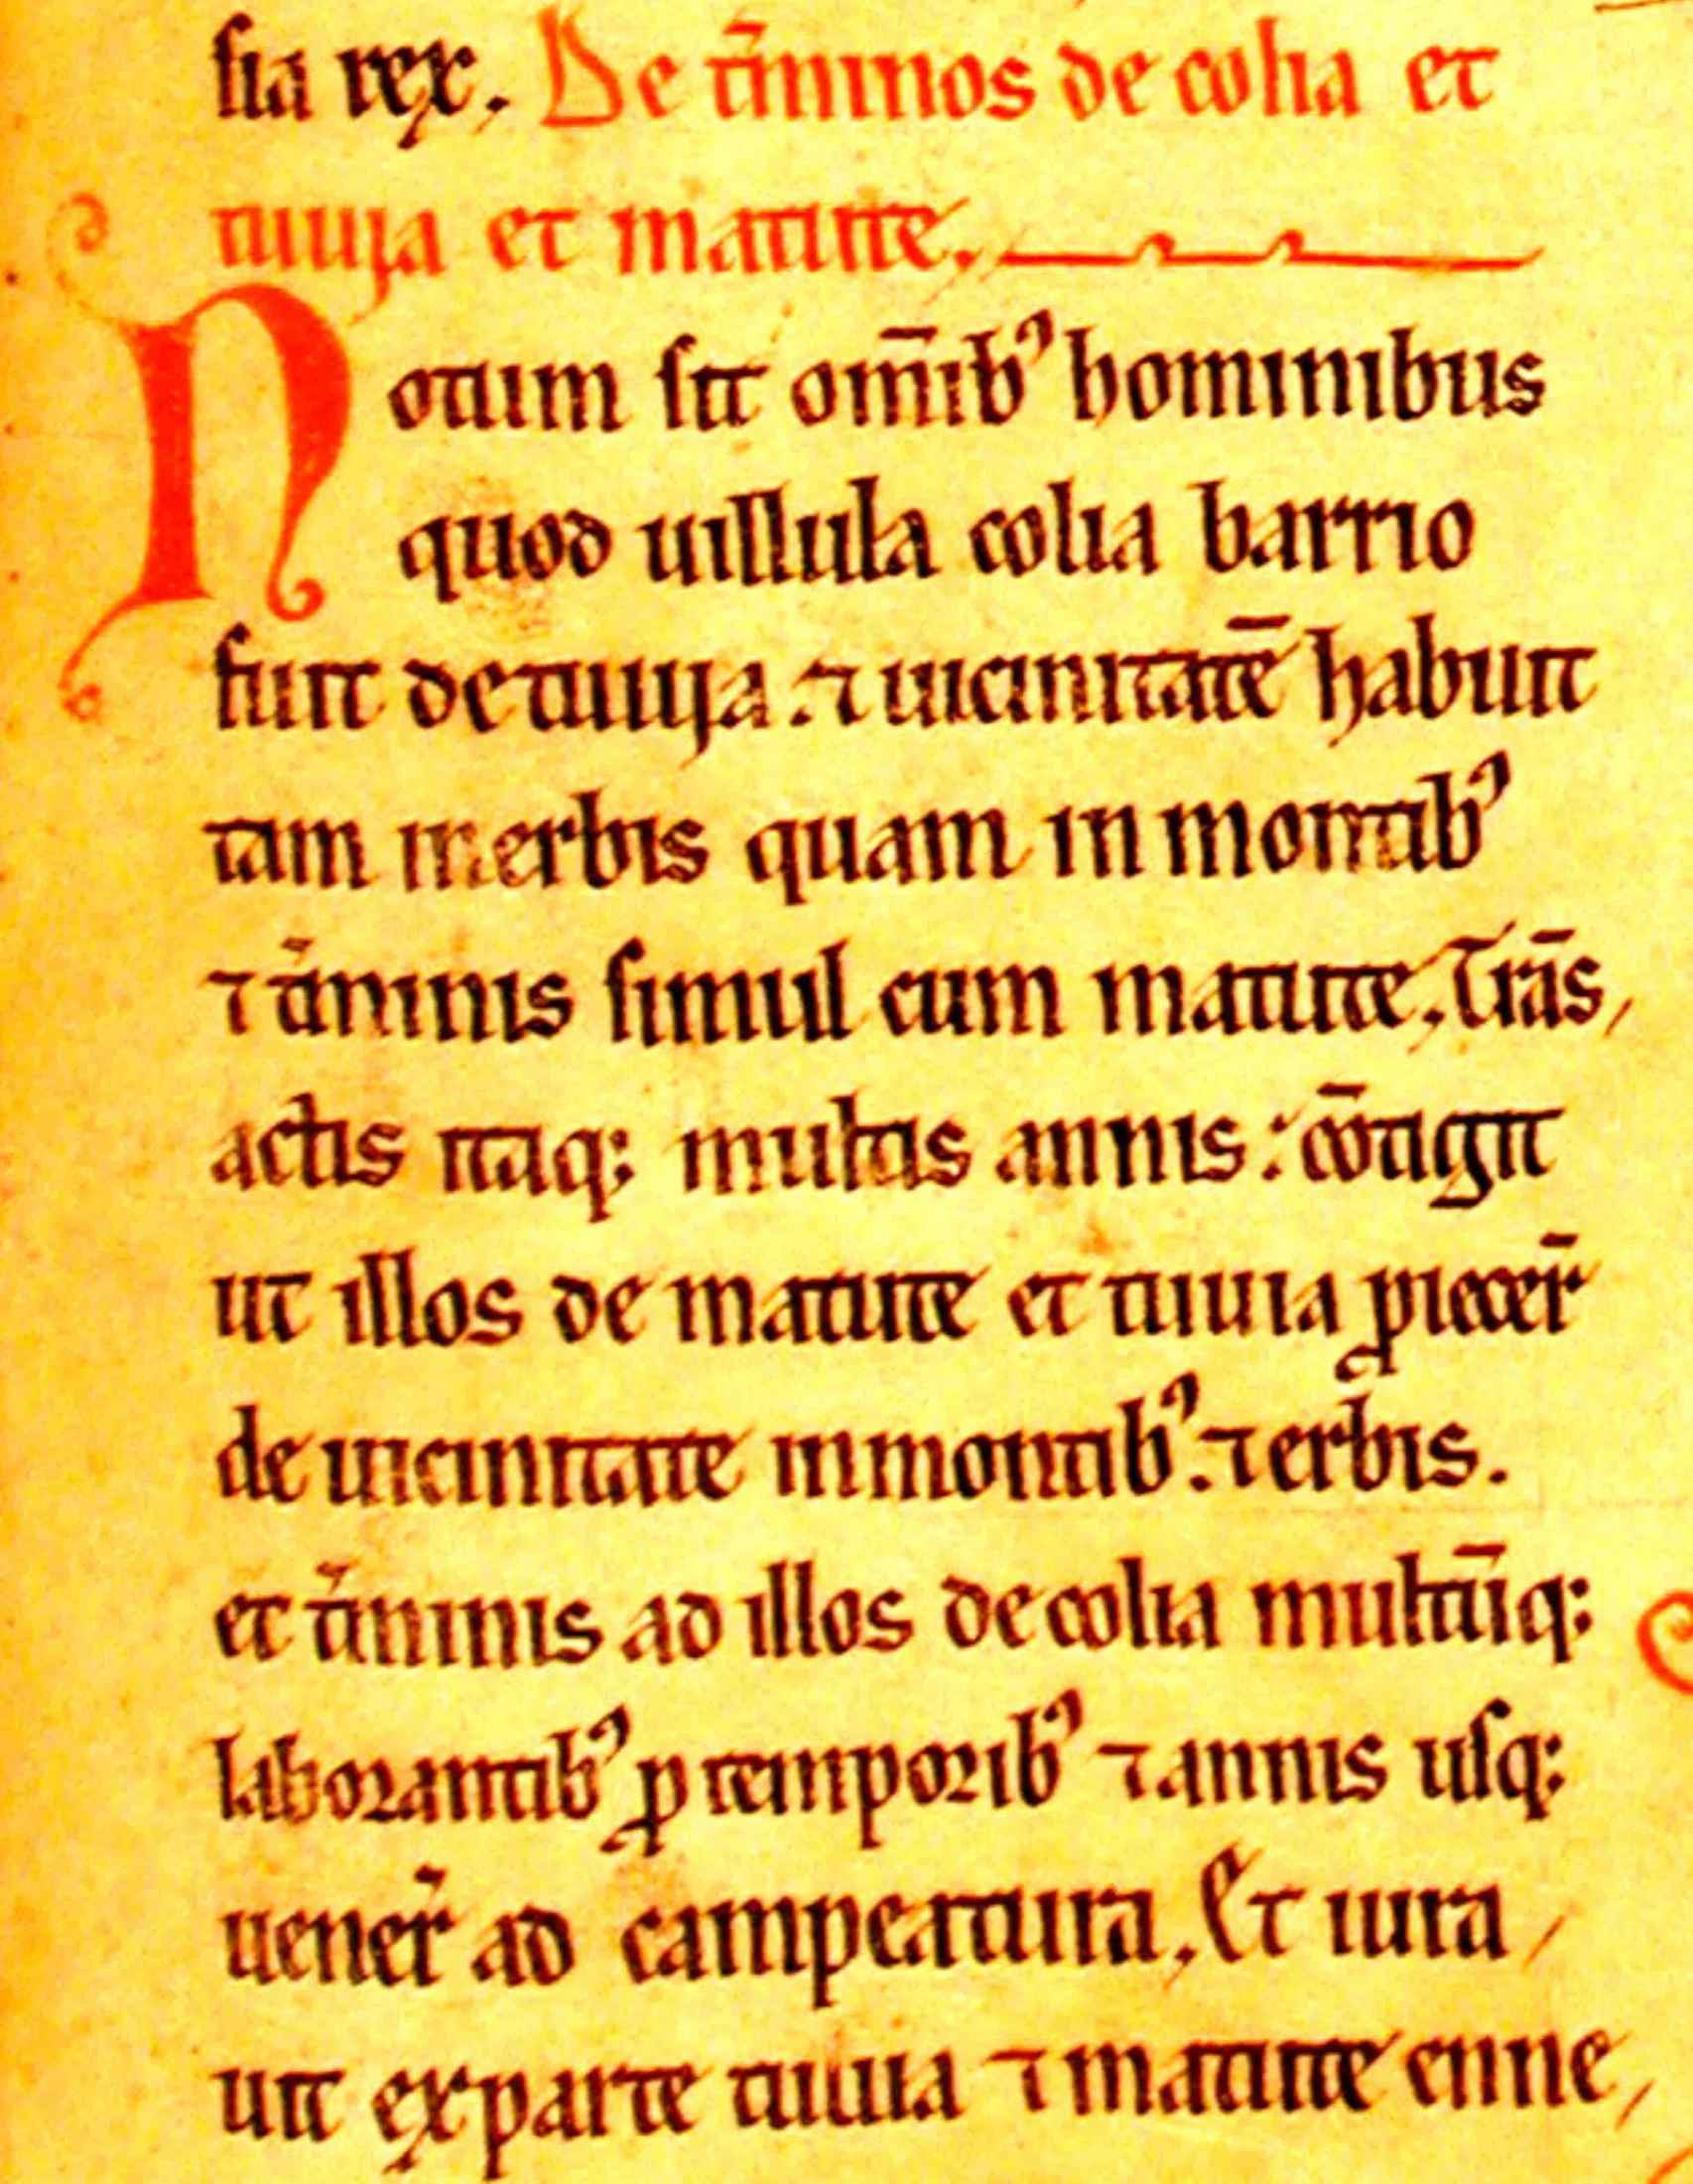 Fragmento del texto de la Campeatura riojana del Becerro Galicano